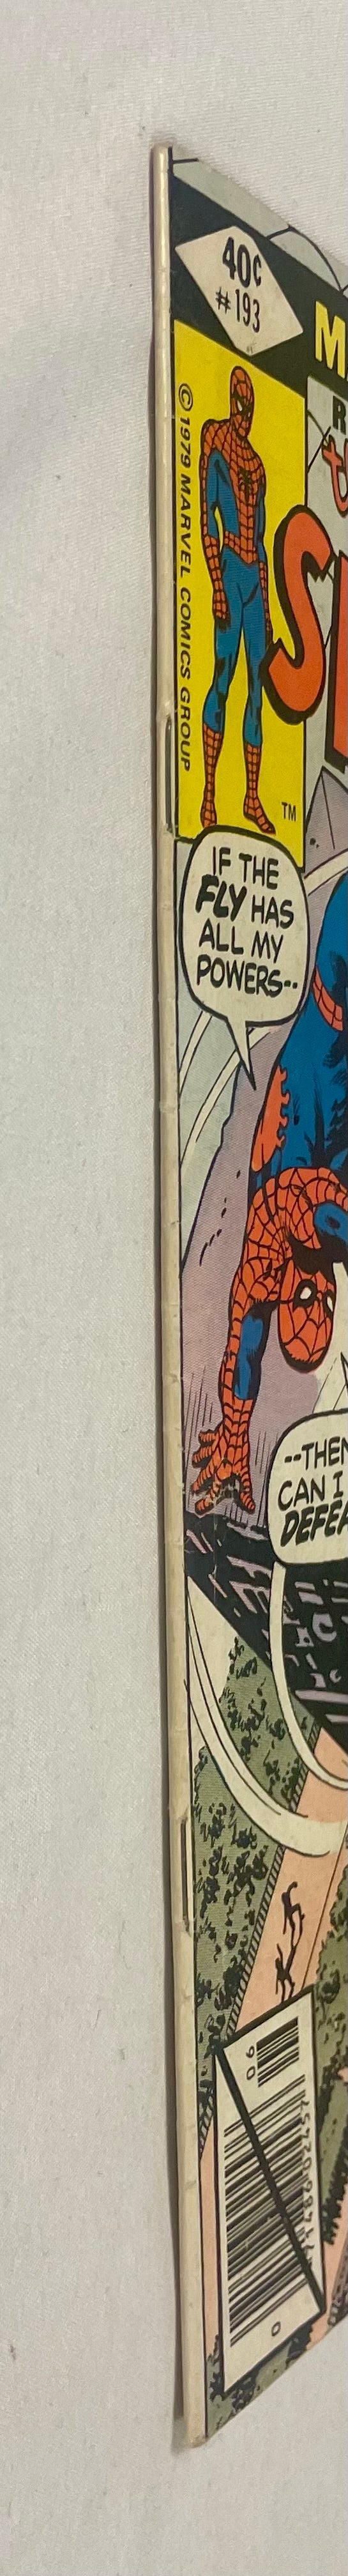 Marvel Comics The Amazing Spider-Man #193